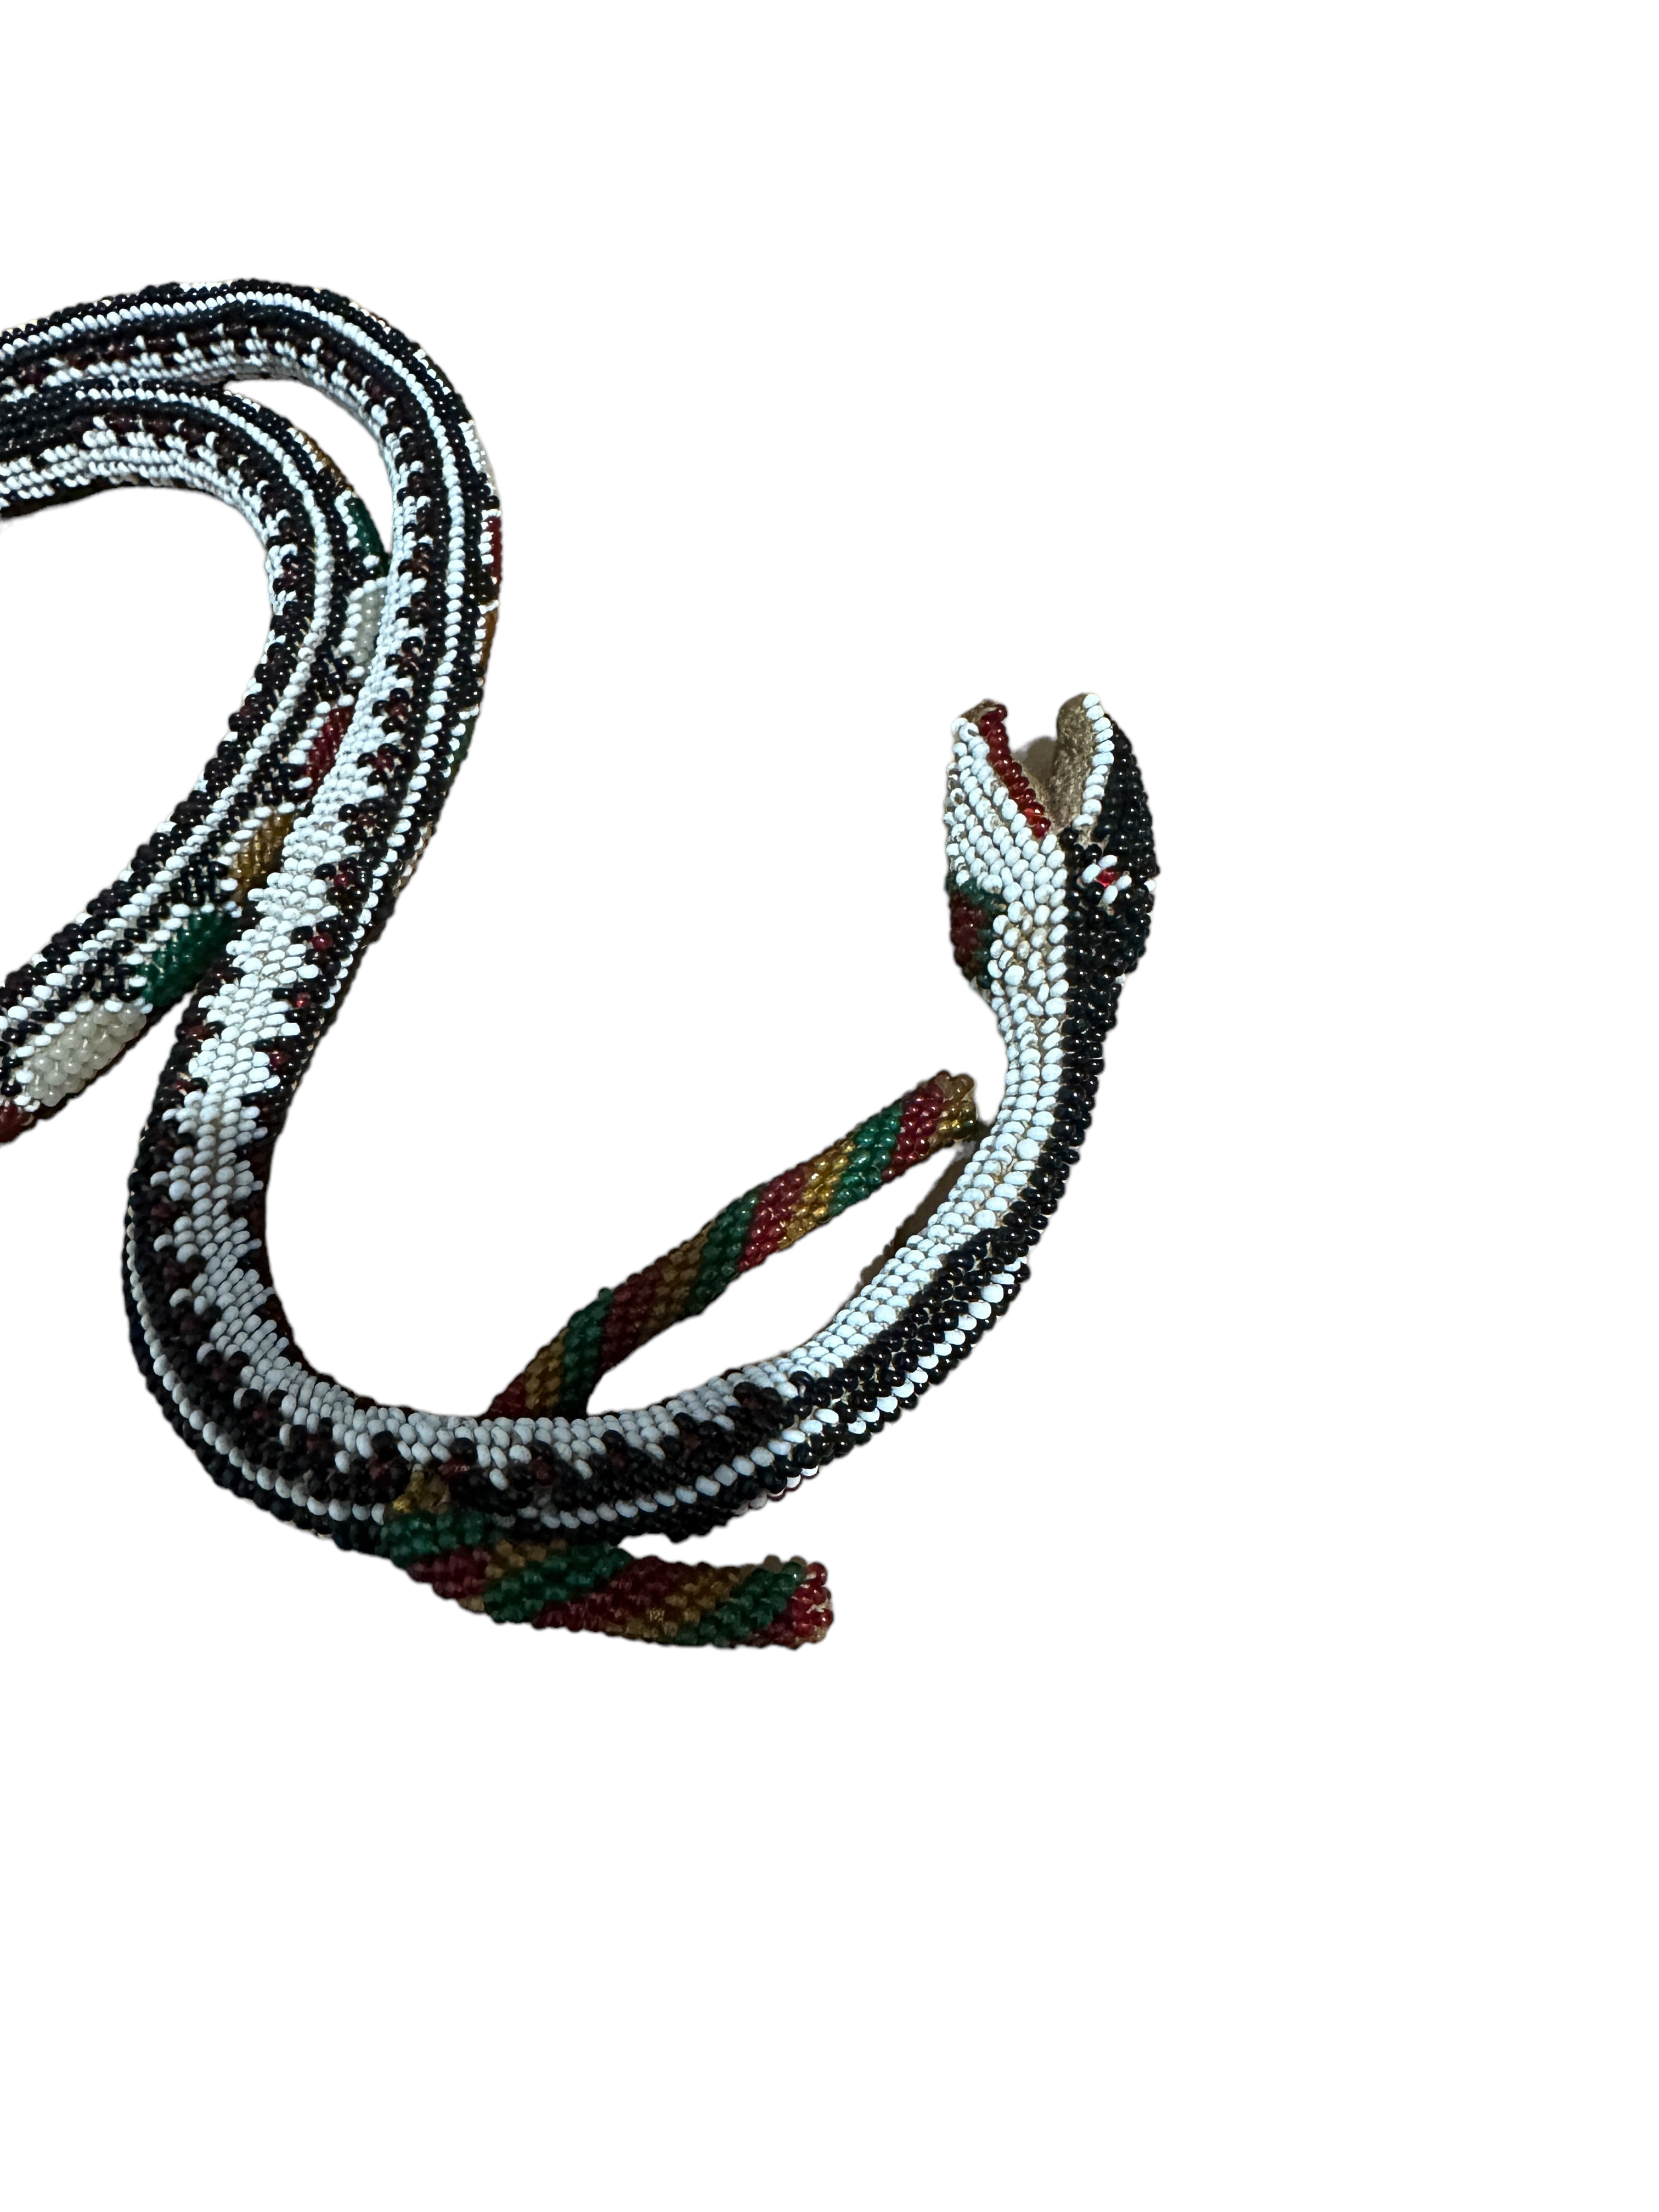 Antique Turkish POW Beaded Snake - 75cm long. - Image 3 of 6